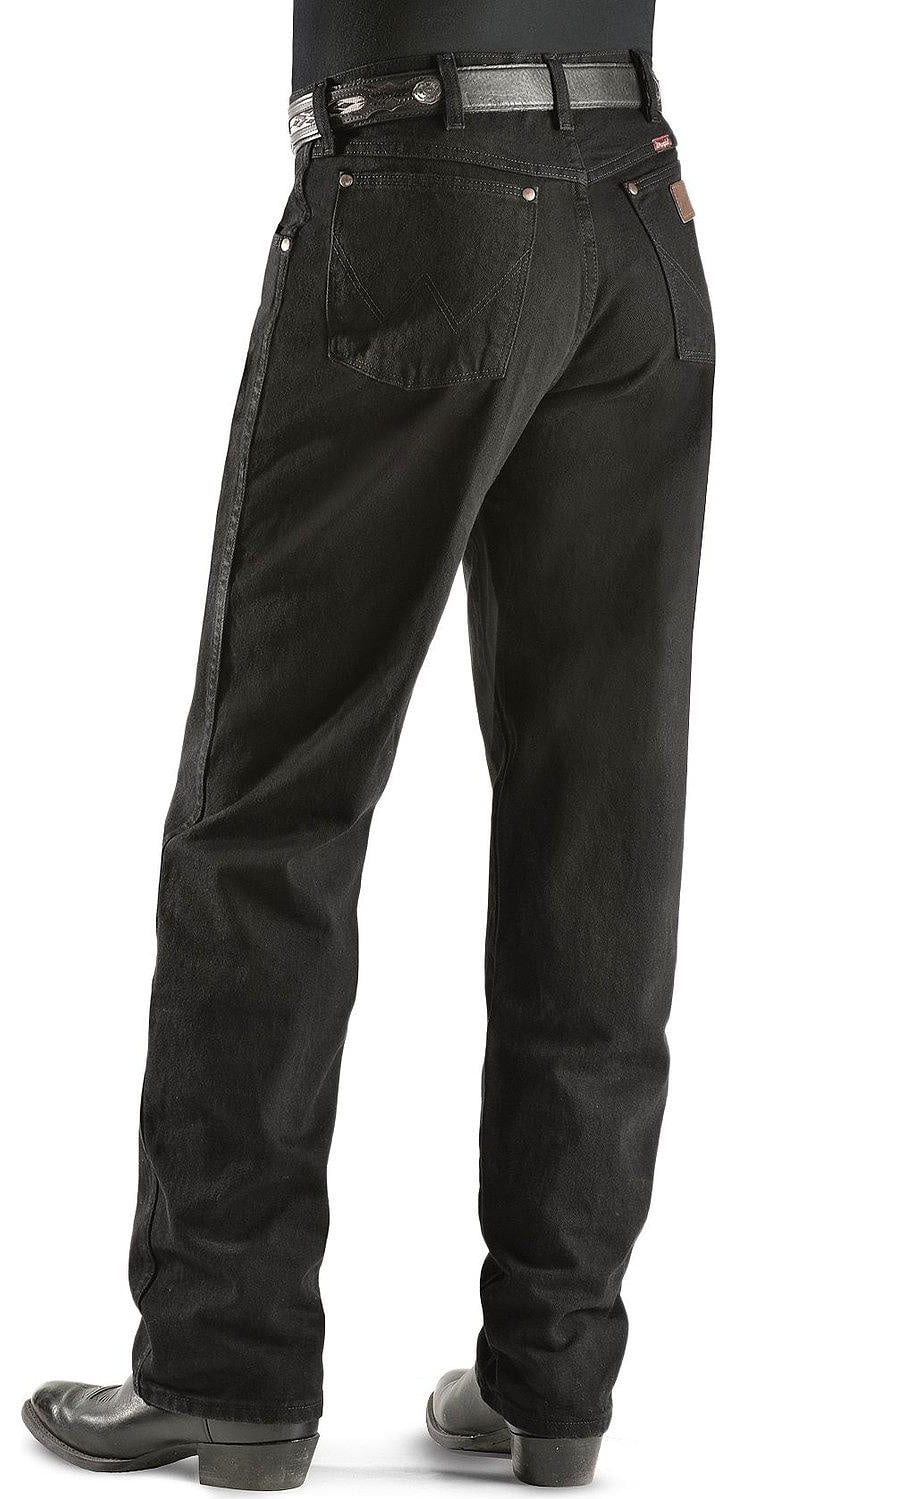 wrangler men's original cowboy cut relaxed fit jean,black,35x36 -  